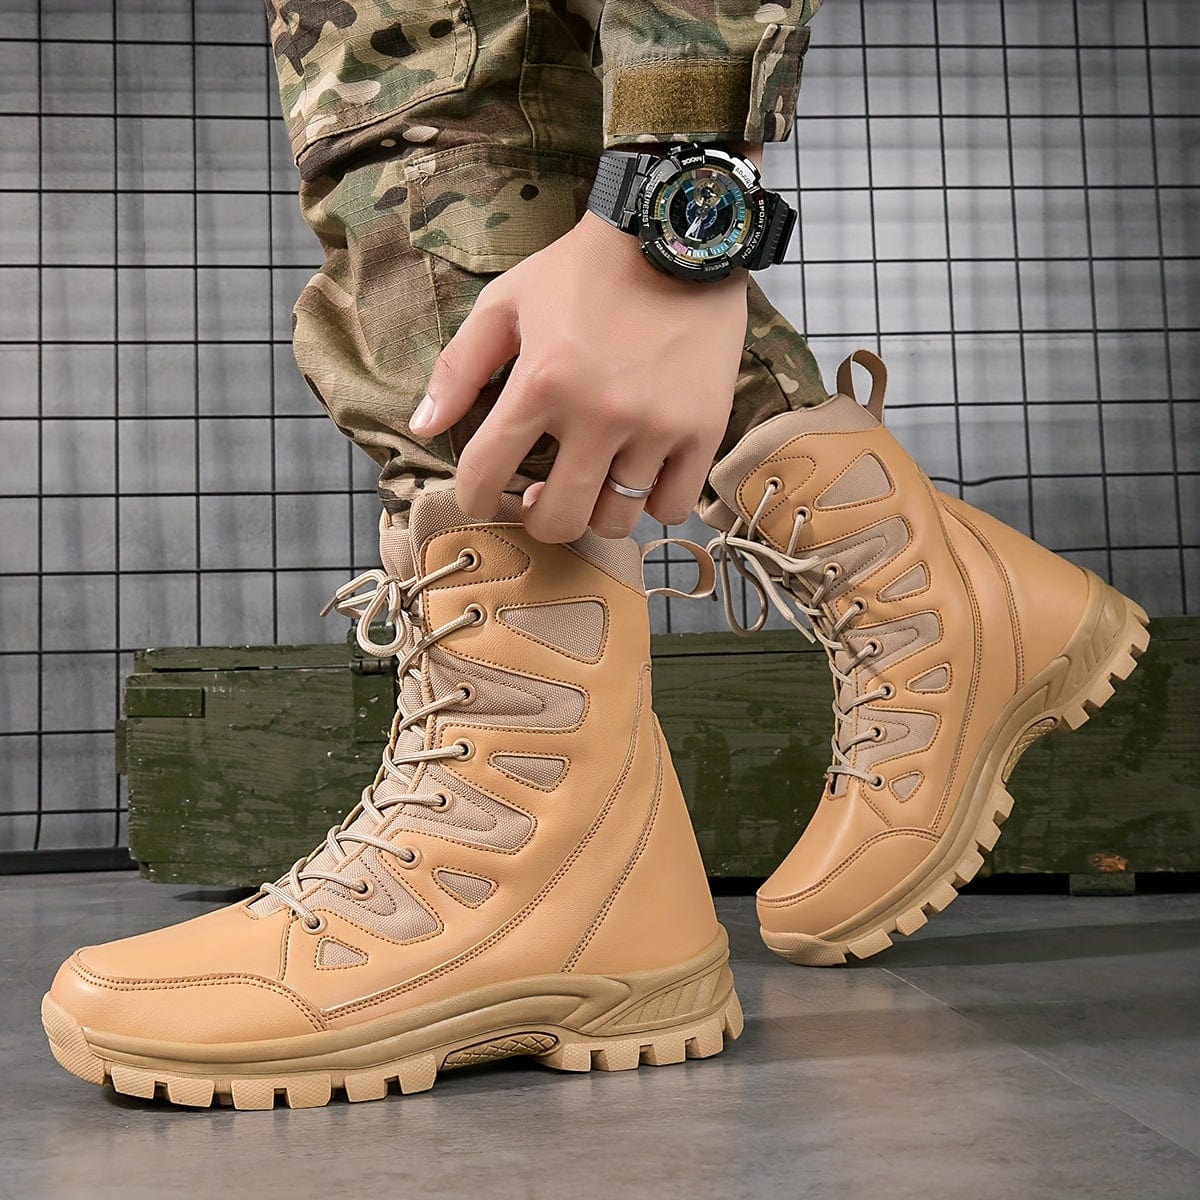 Men's High Top Military Tactical Work Boots, Waterproof Non Slip Durable Boots For Outdoor Hiking Activities